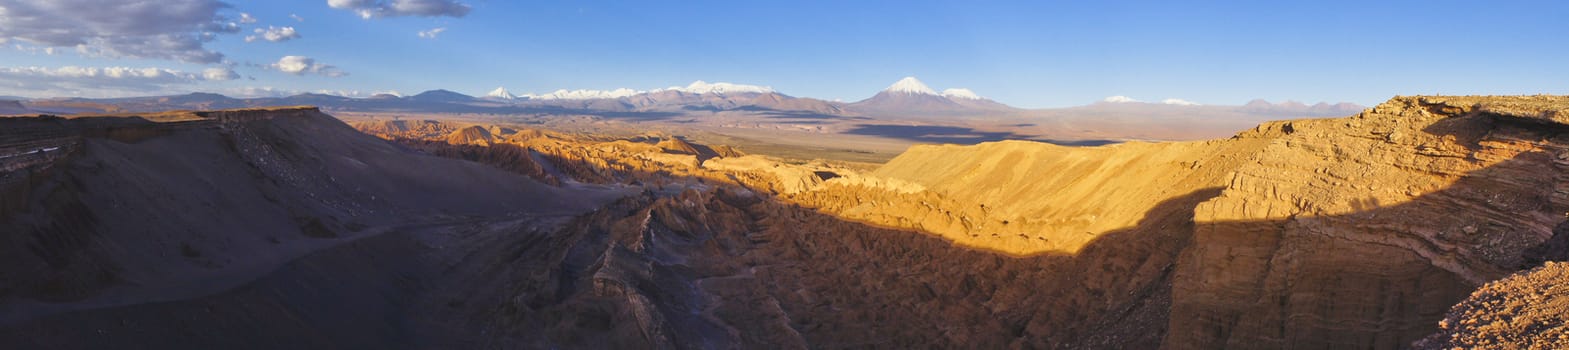 Chile, Atacama Desert